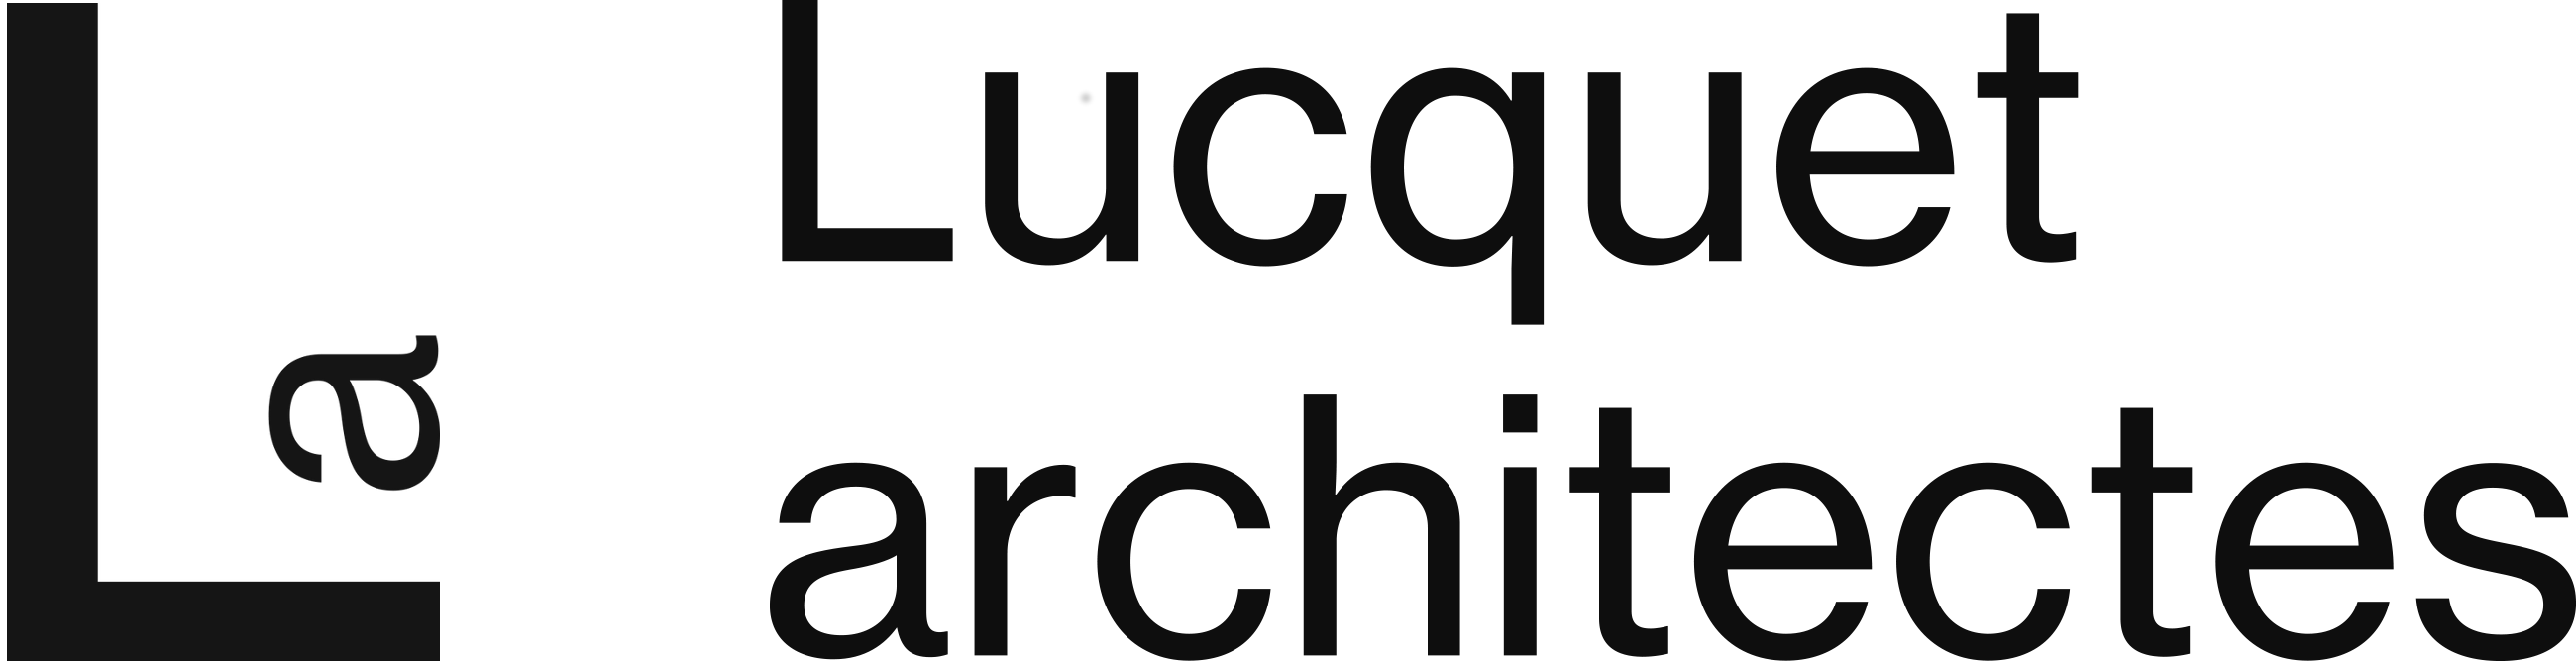 Lucquet Architectes